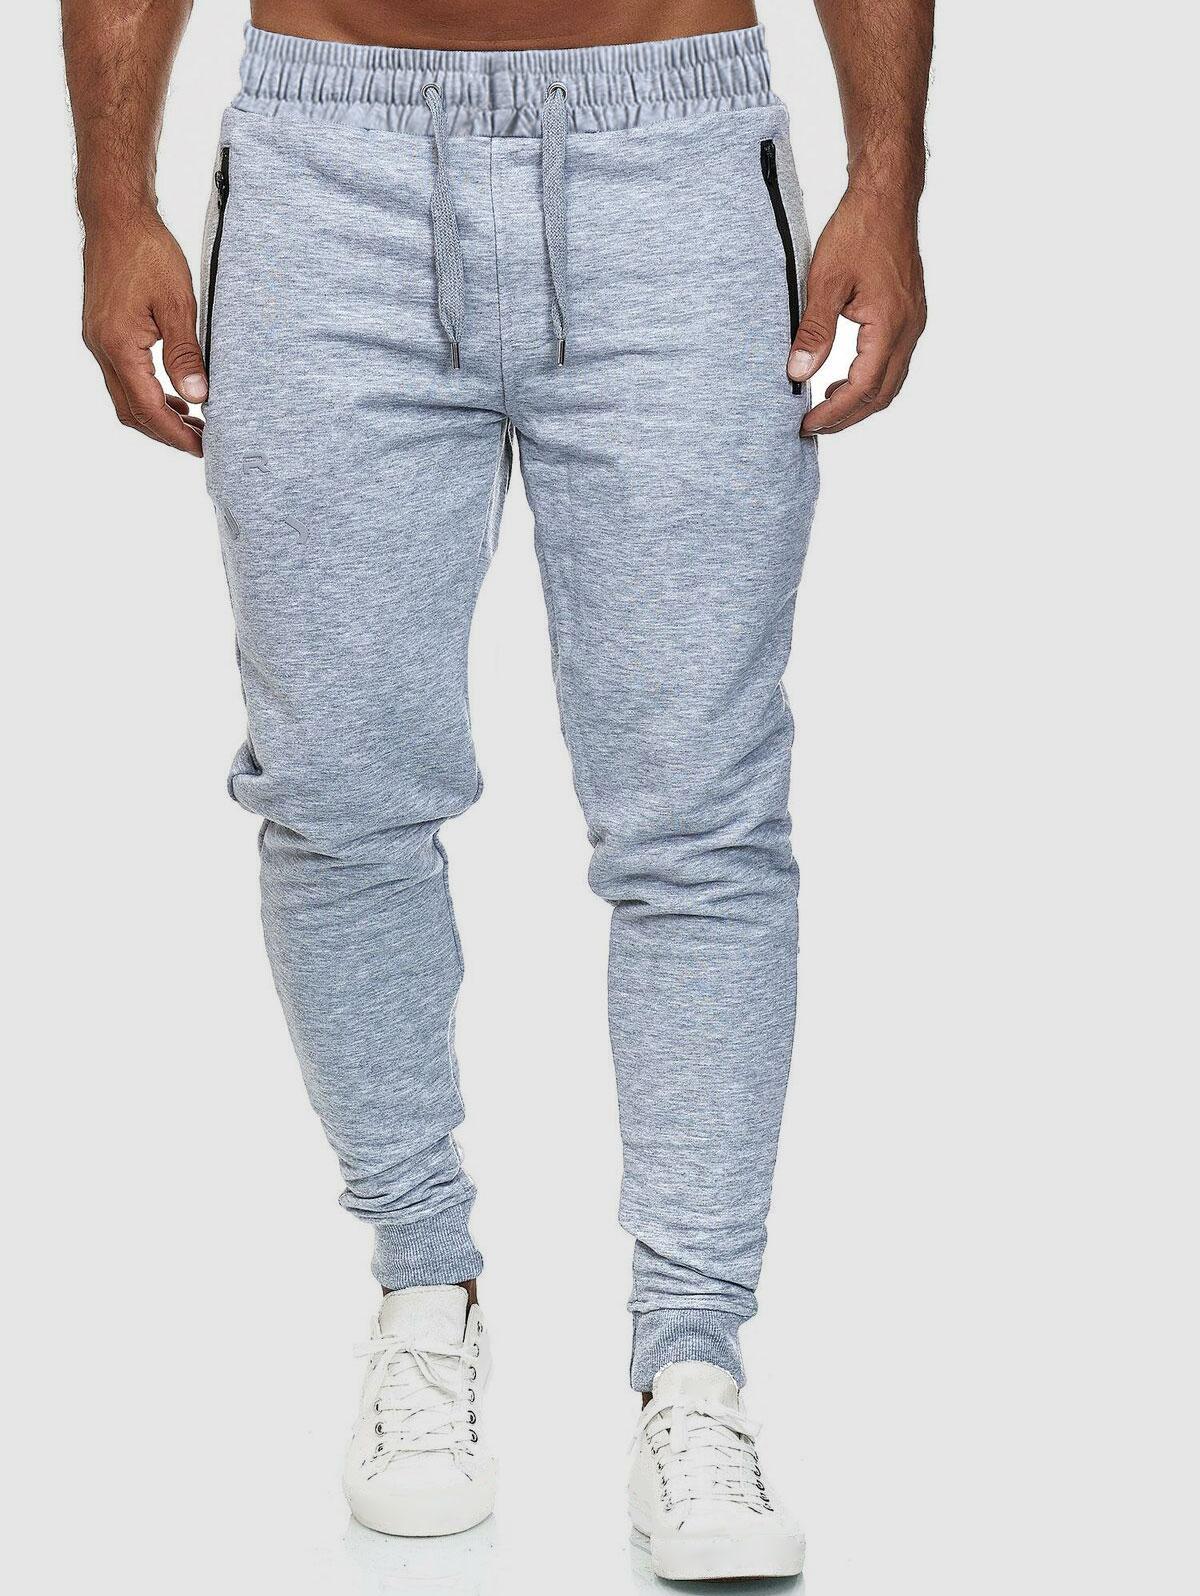 ZAFUL Men's Zip Pocket Design Drawstring Jogger Pants Xl Light gray